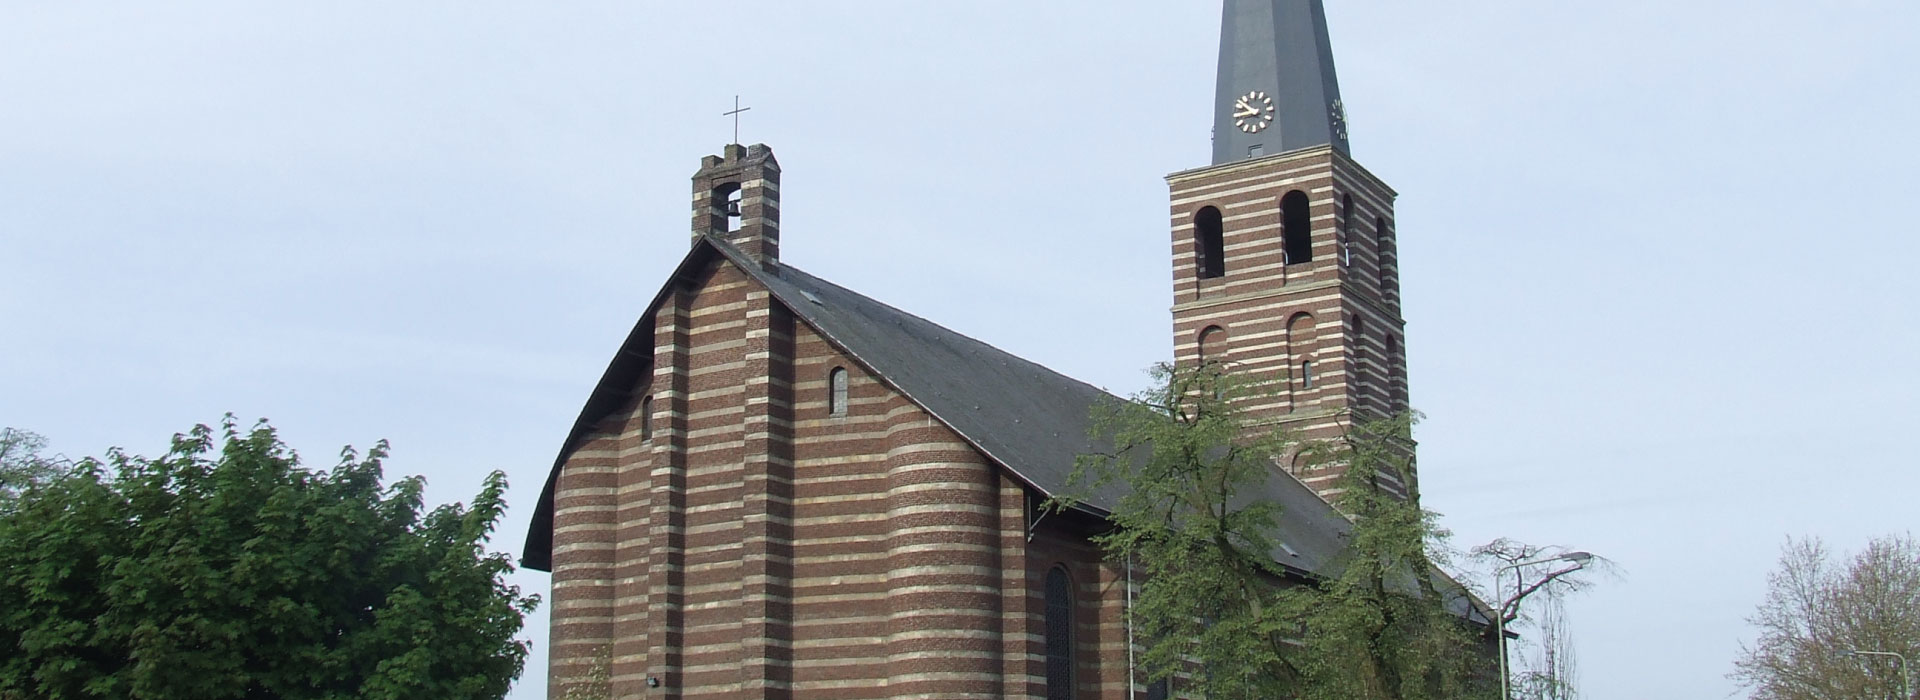 Sint Nicolaas Kerk - Parochie Meijel